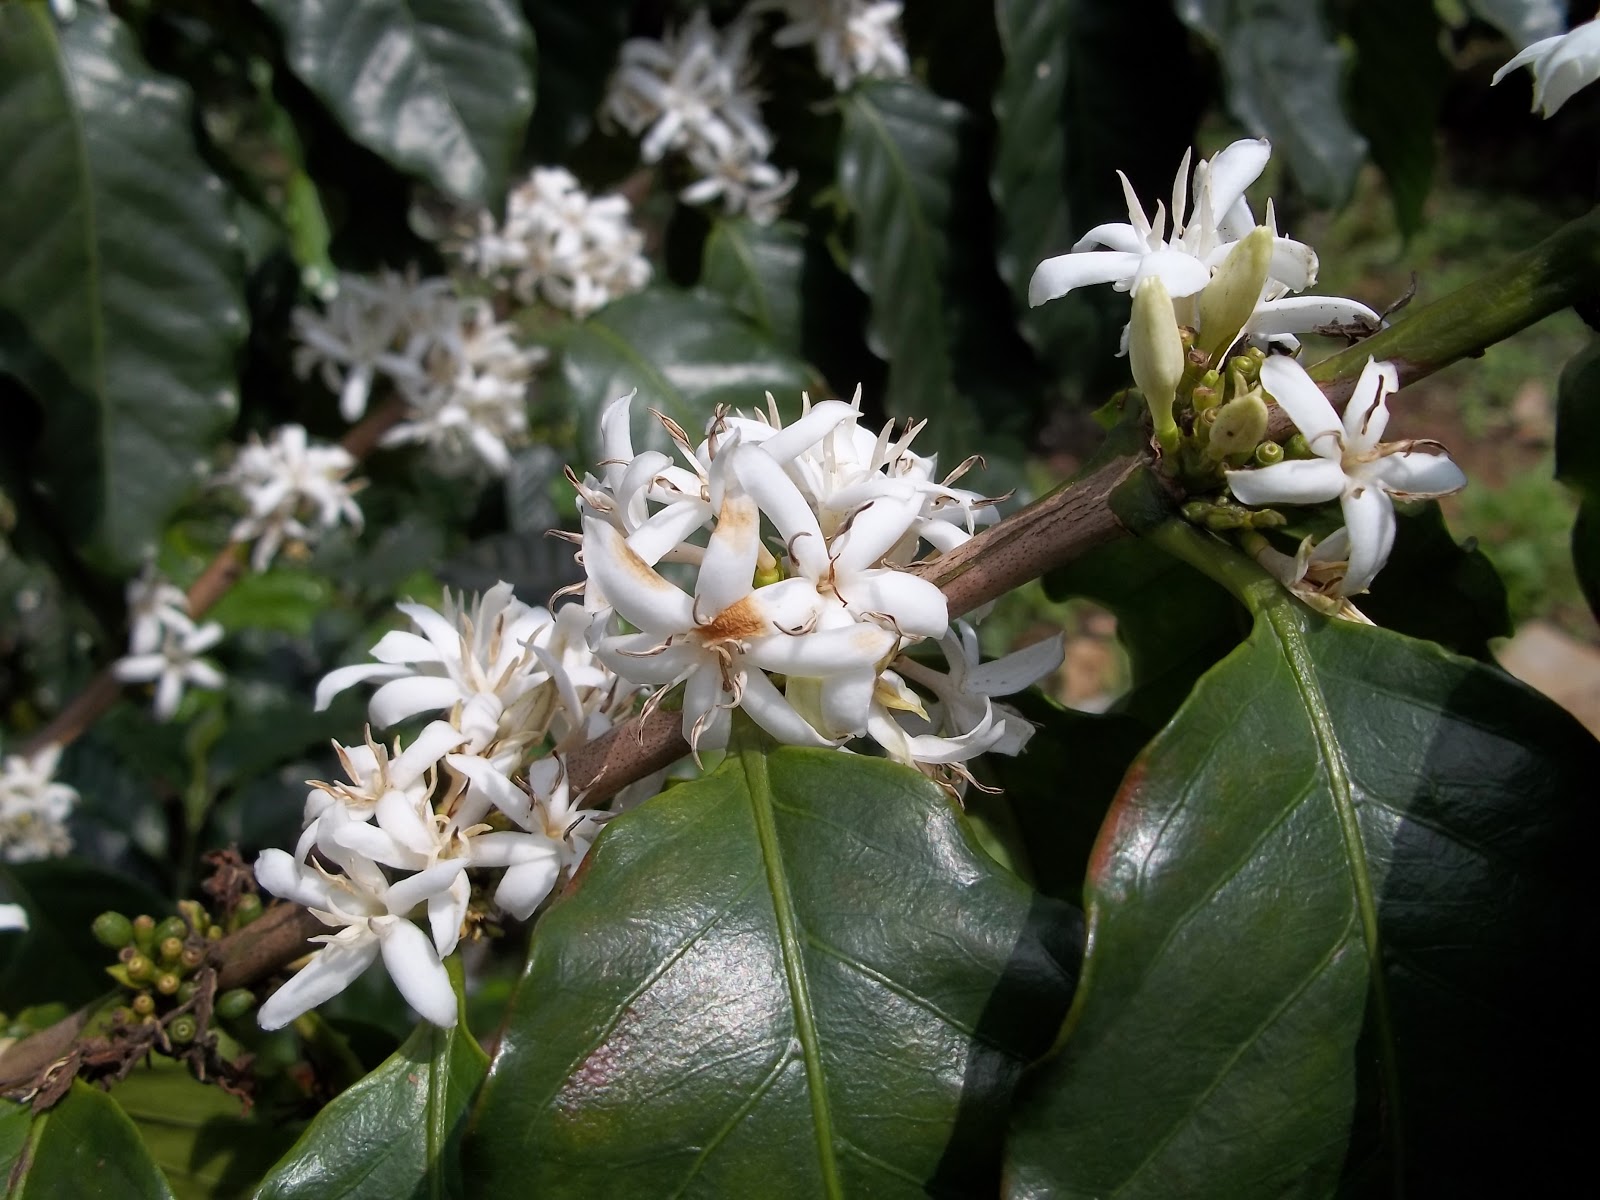 File:Coffee Flowers.JPG - Wikipedia, the free encyclopedia